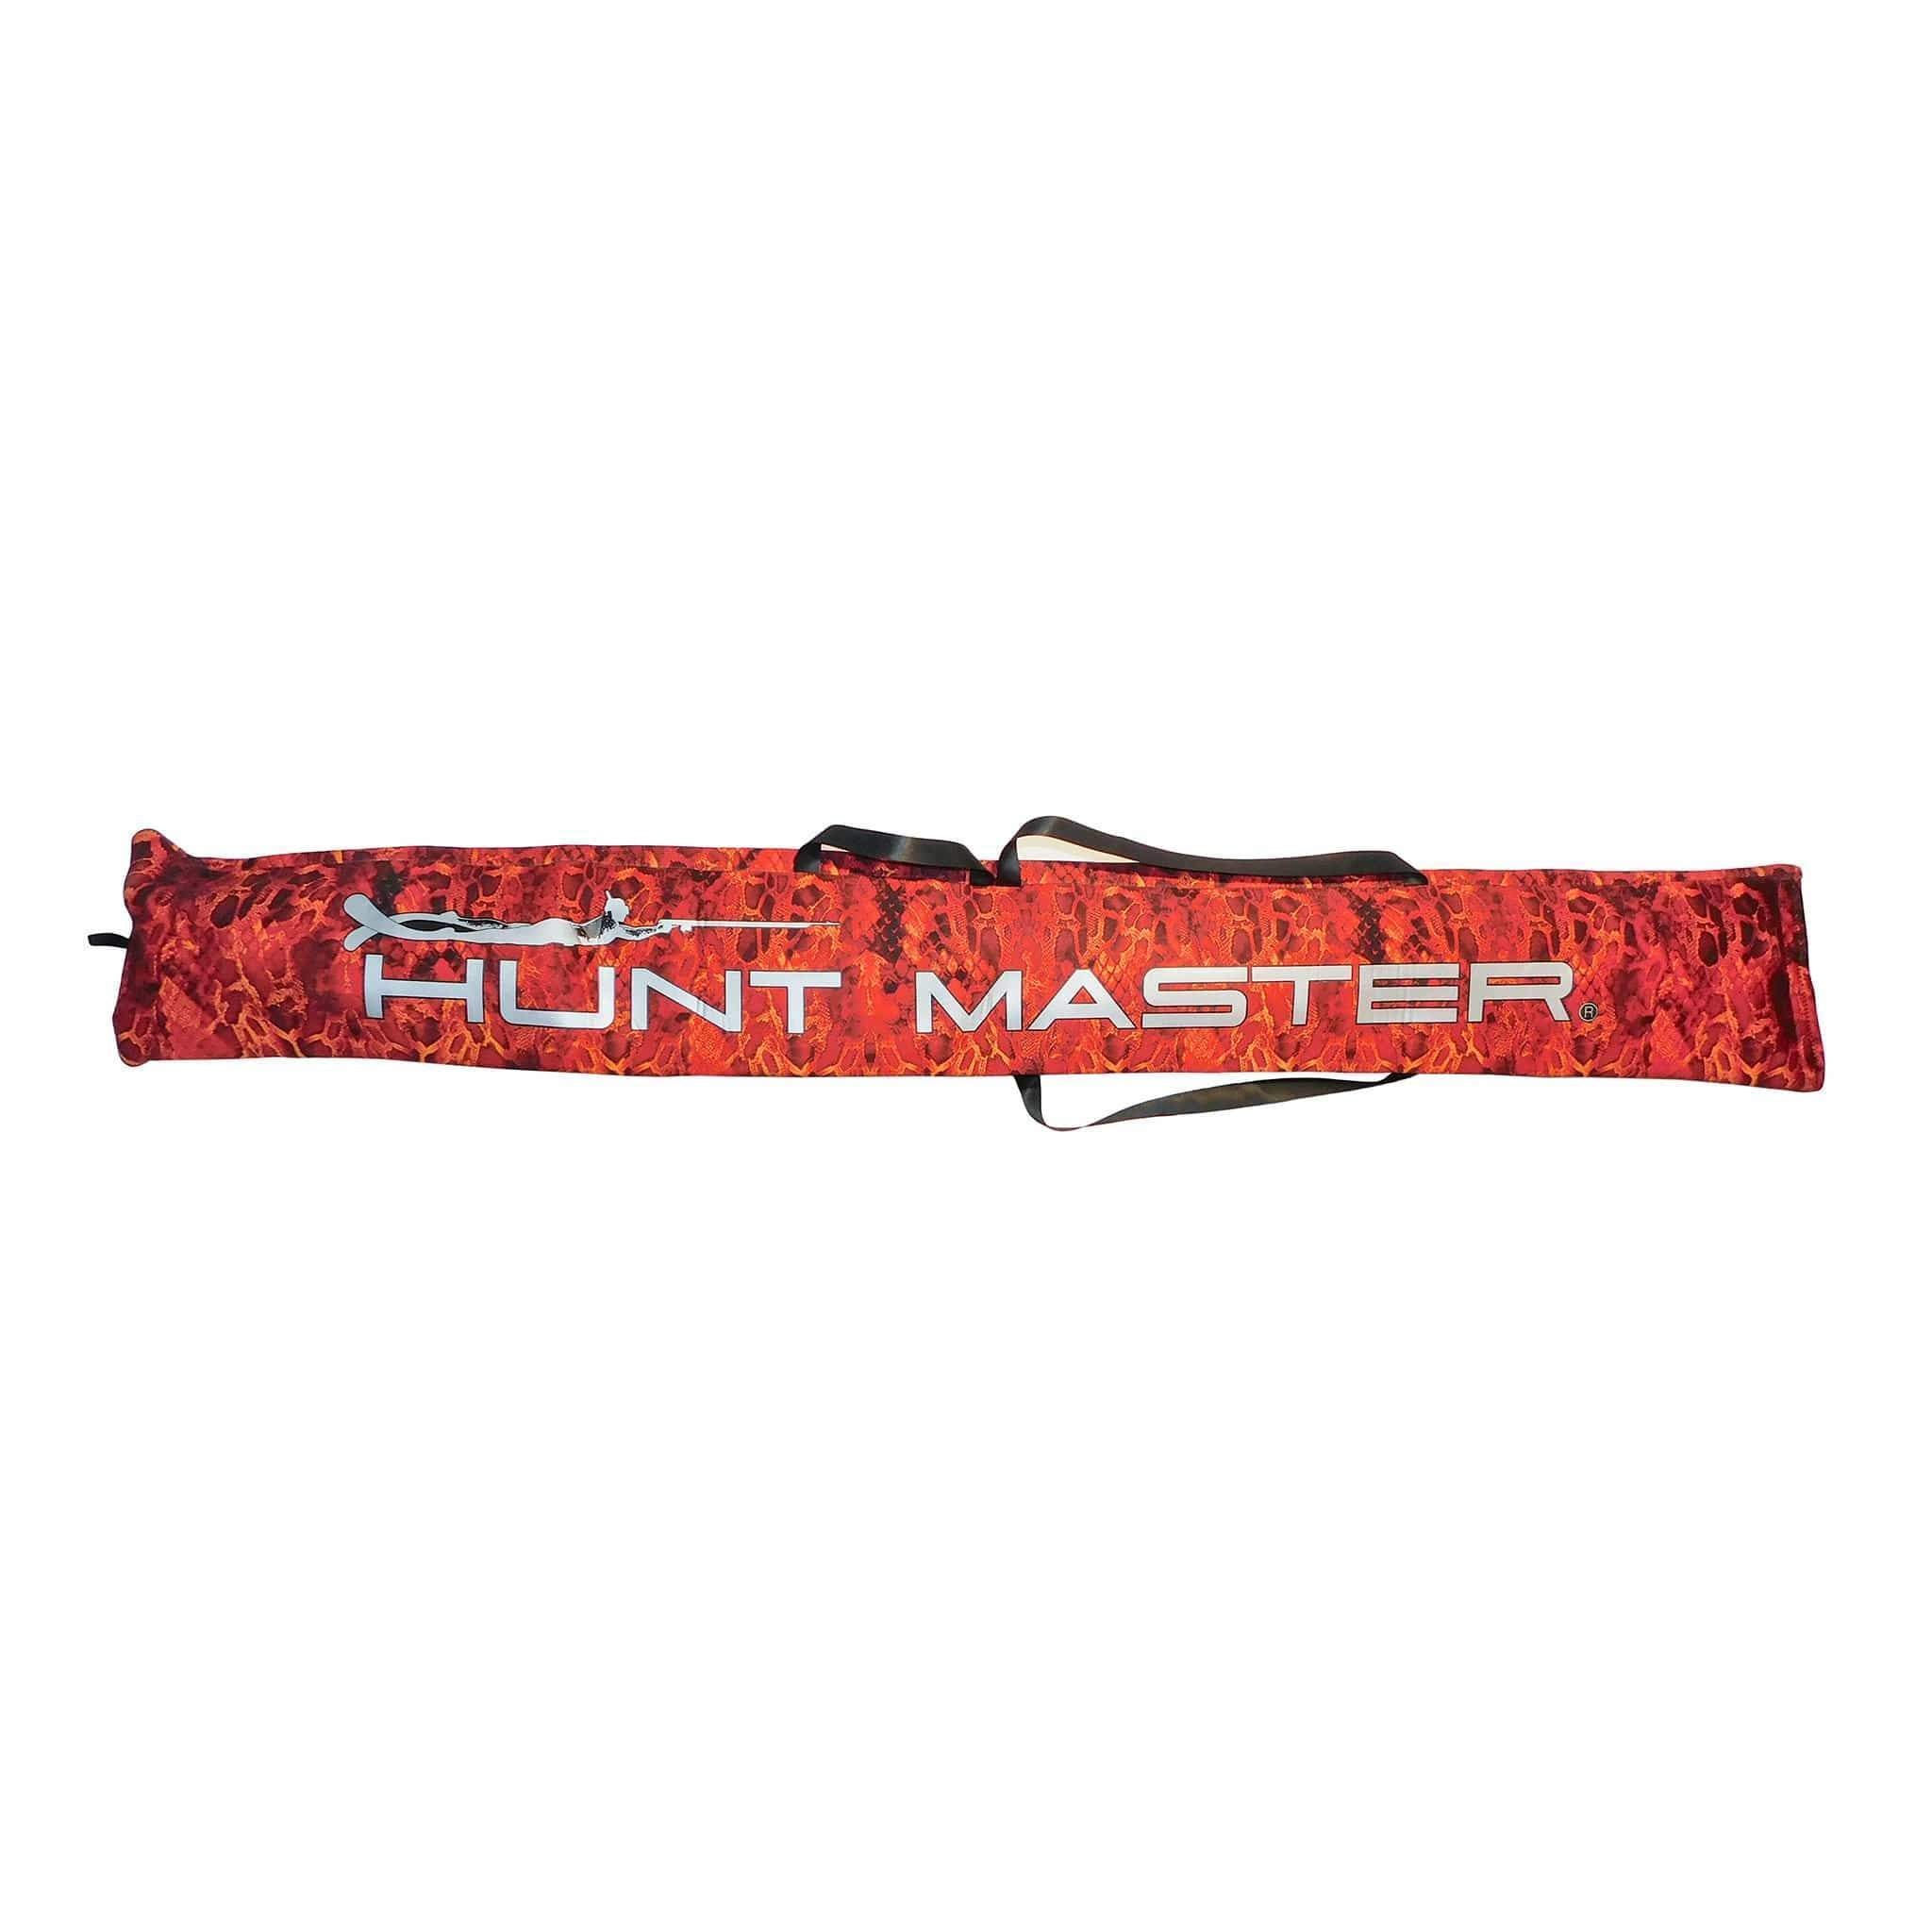 HuntMaster Red Neoprene Gun Bag - Camo Series (Red)